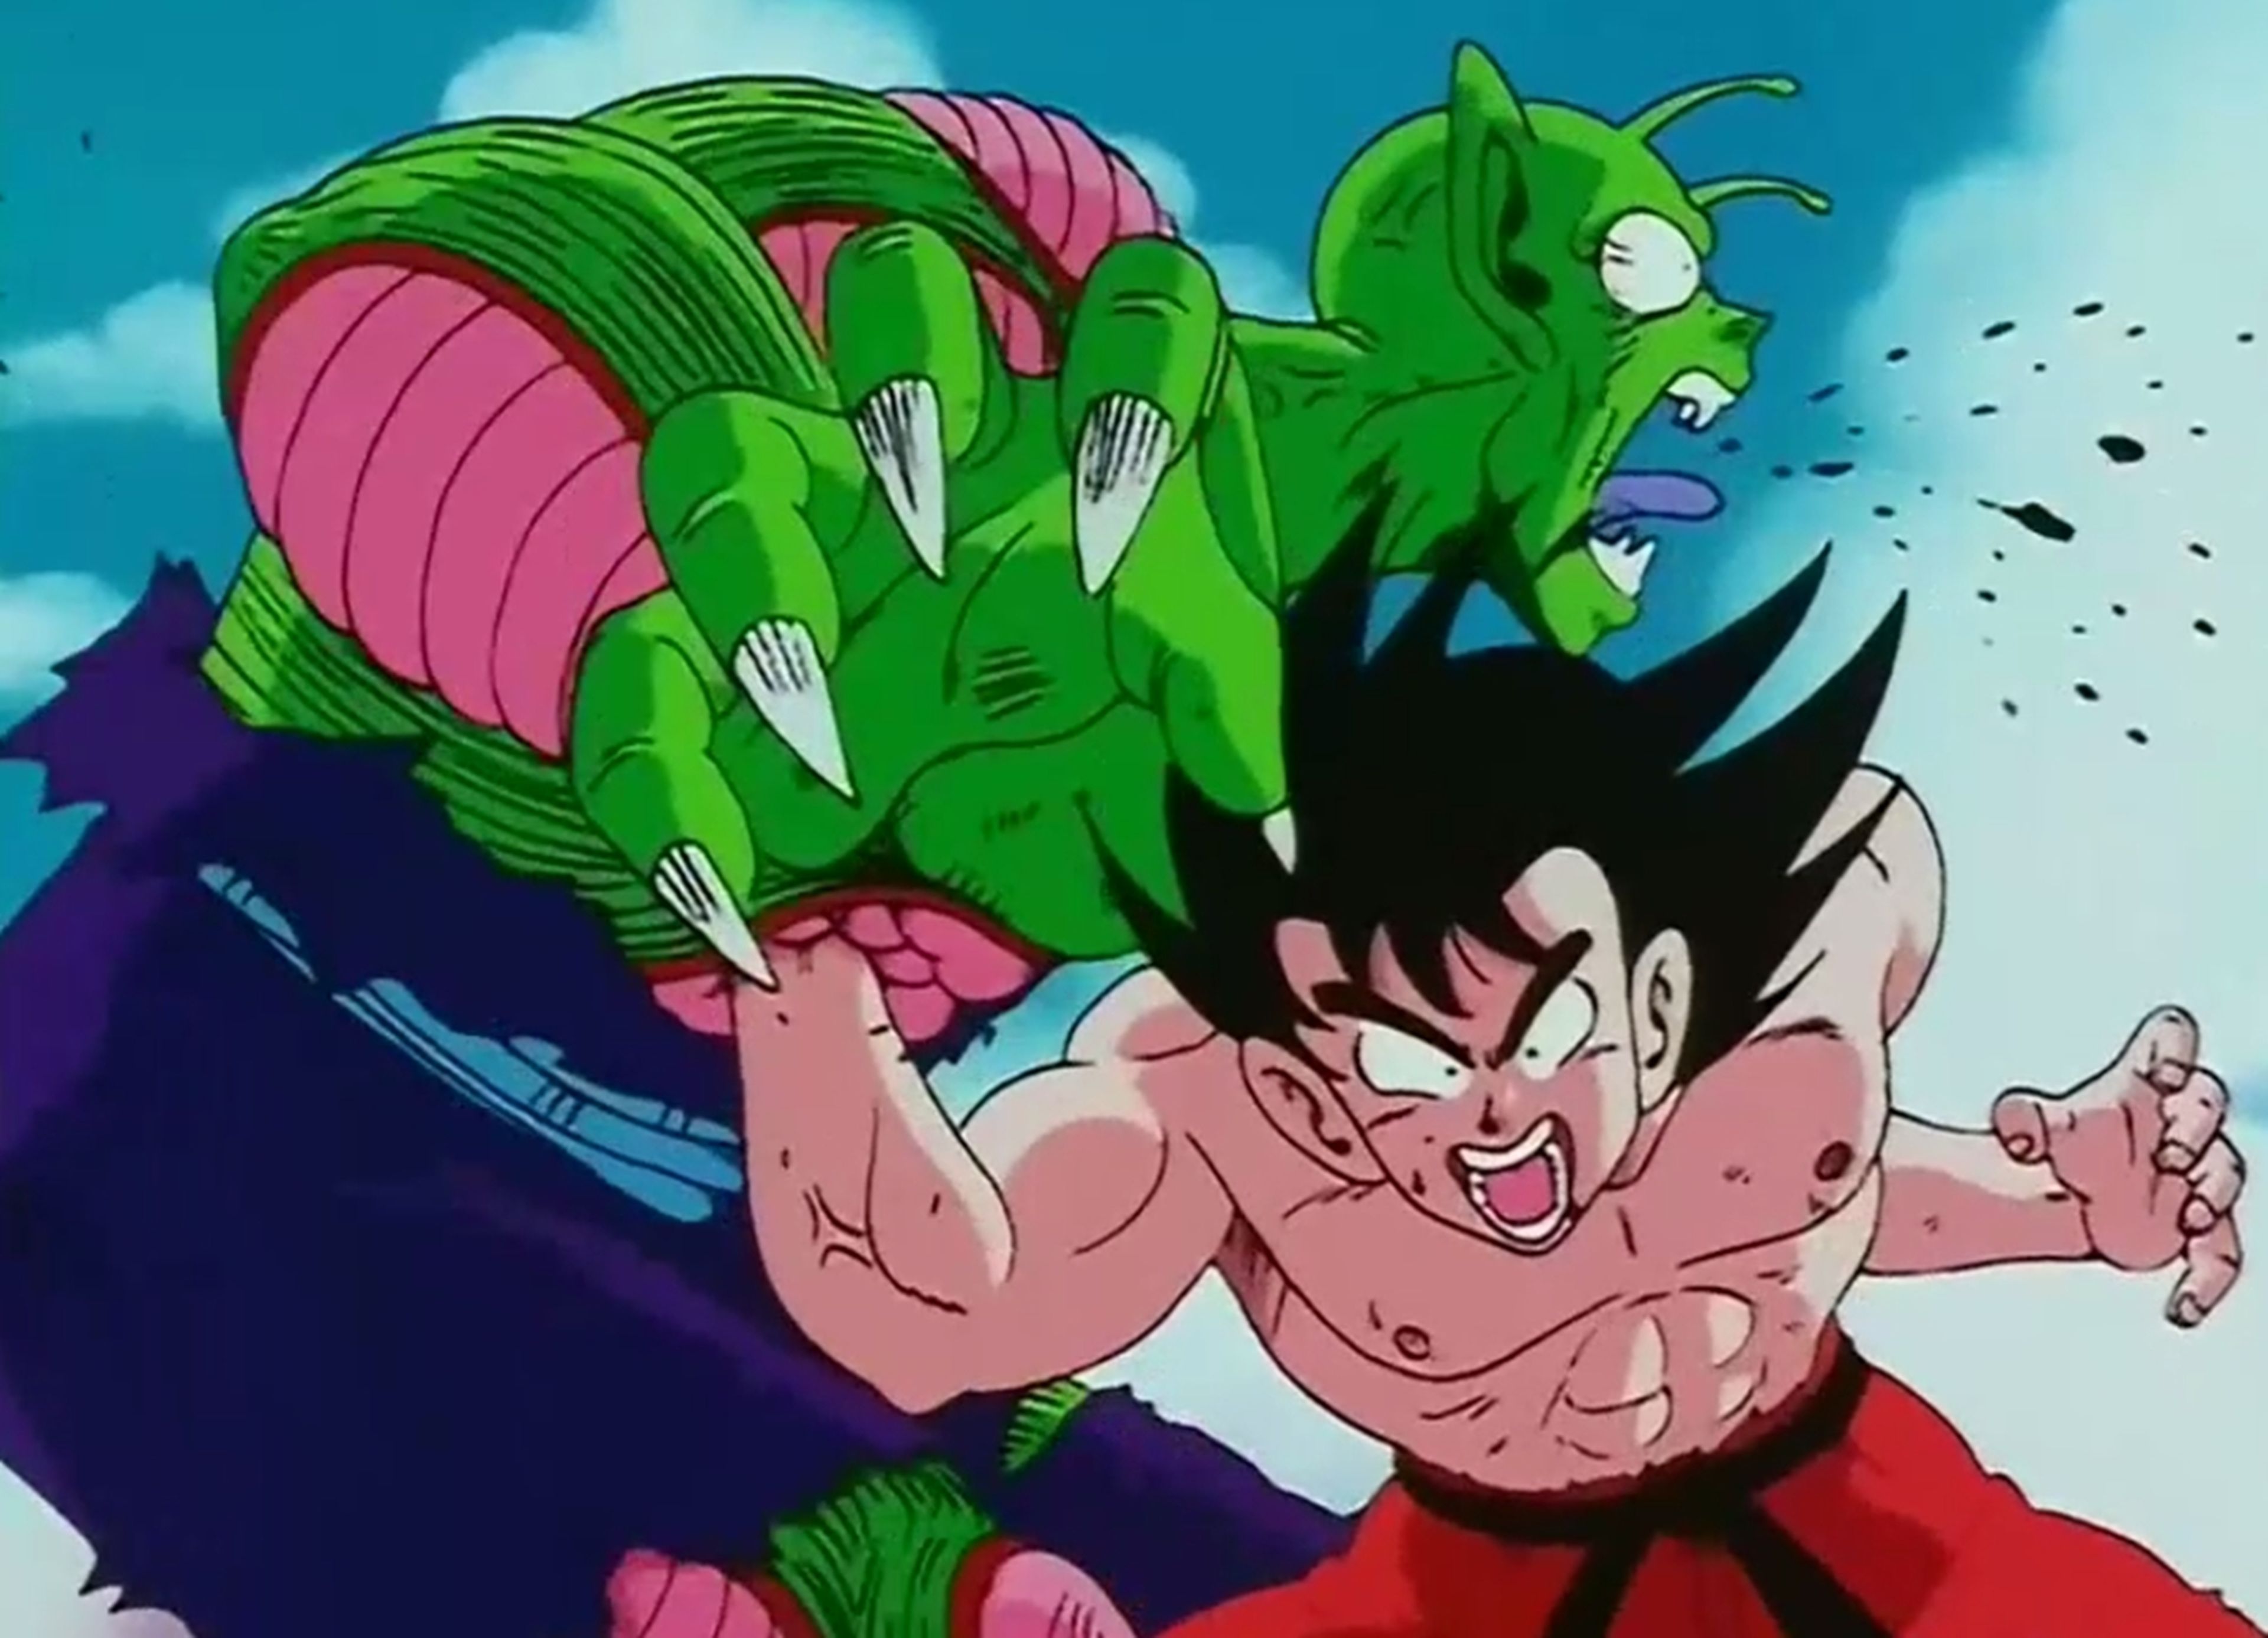 Goku vs Piccolo